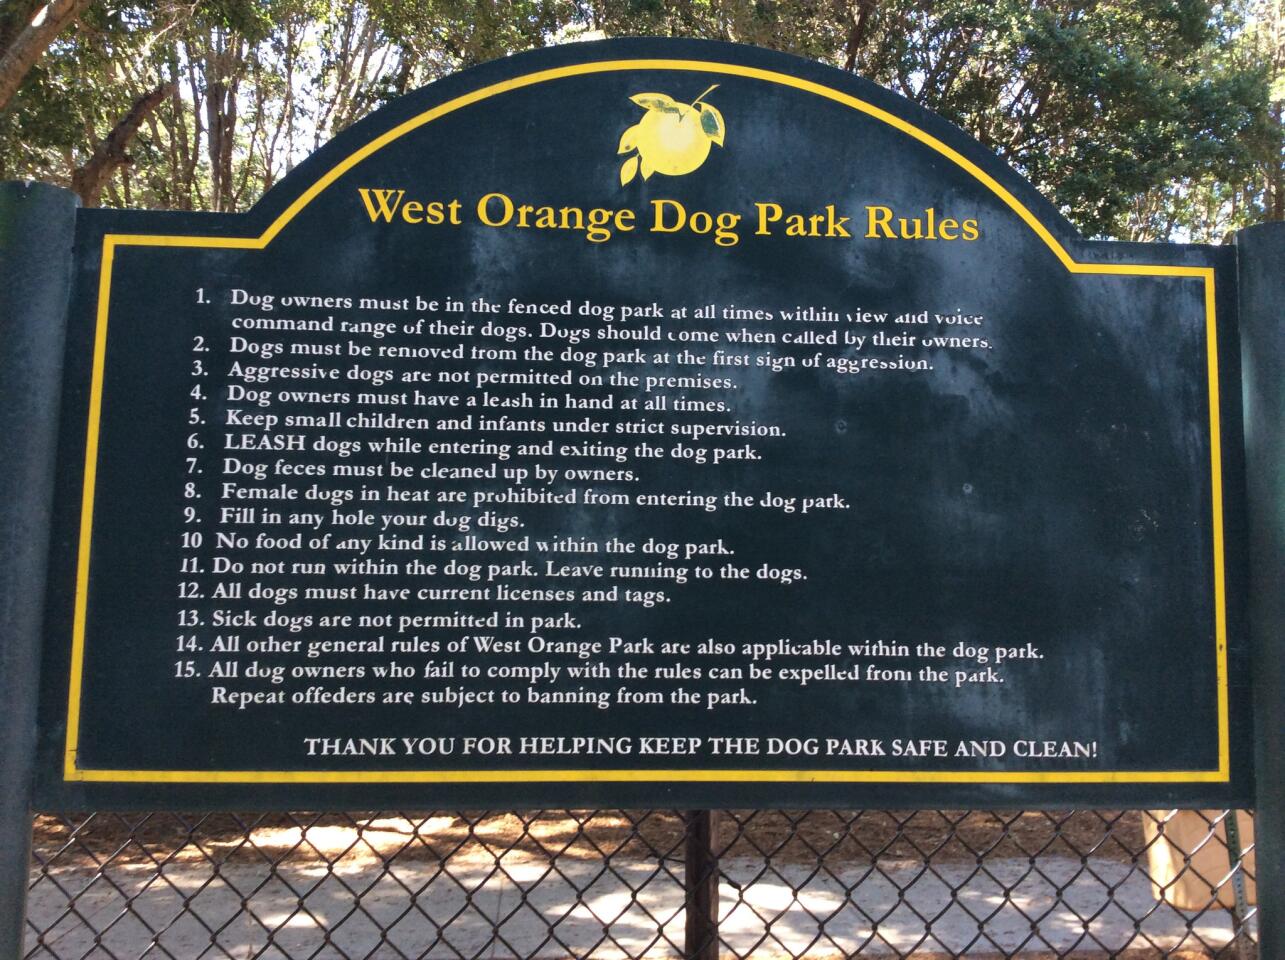 My favorite thing: West Orange Dog Park